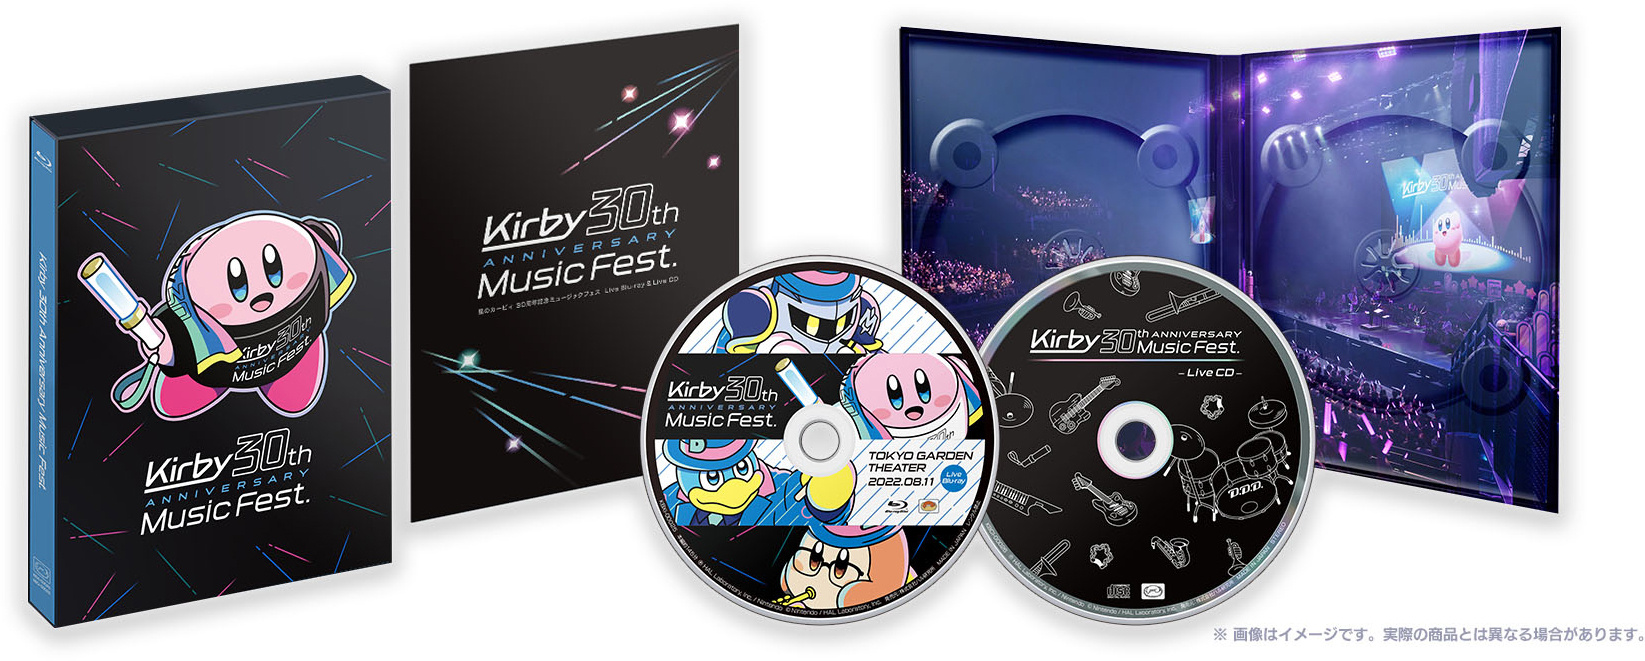 Kirby: 30th Anniversary Music Fest. Live Blu-ray & Live CD